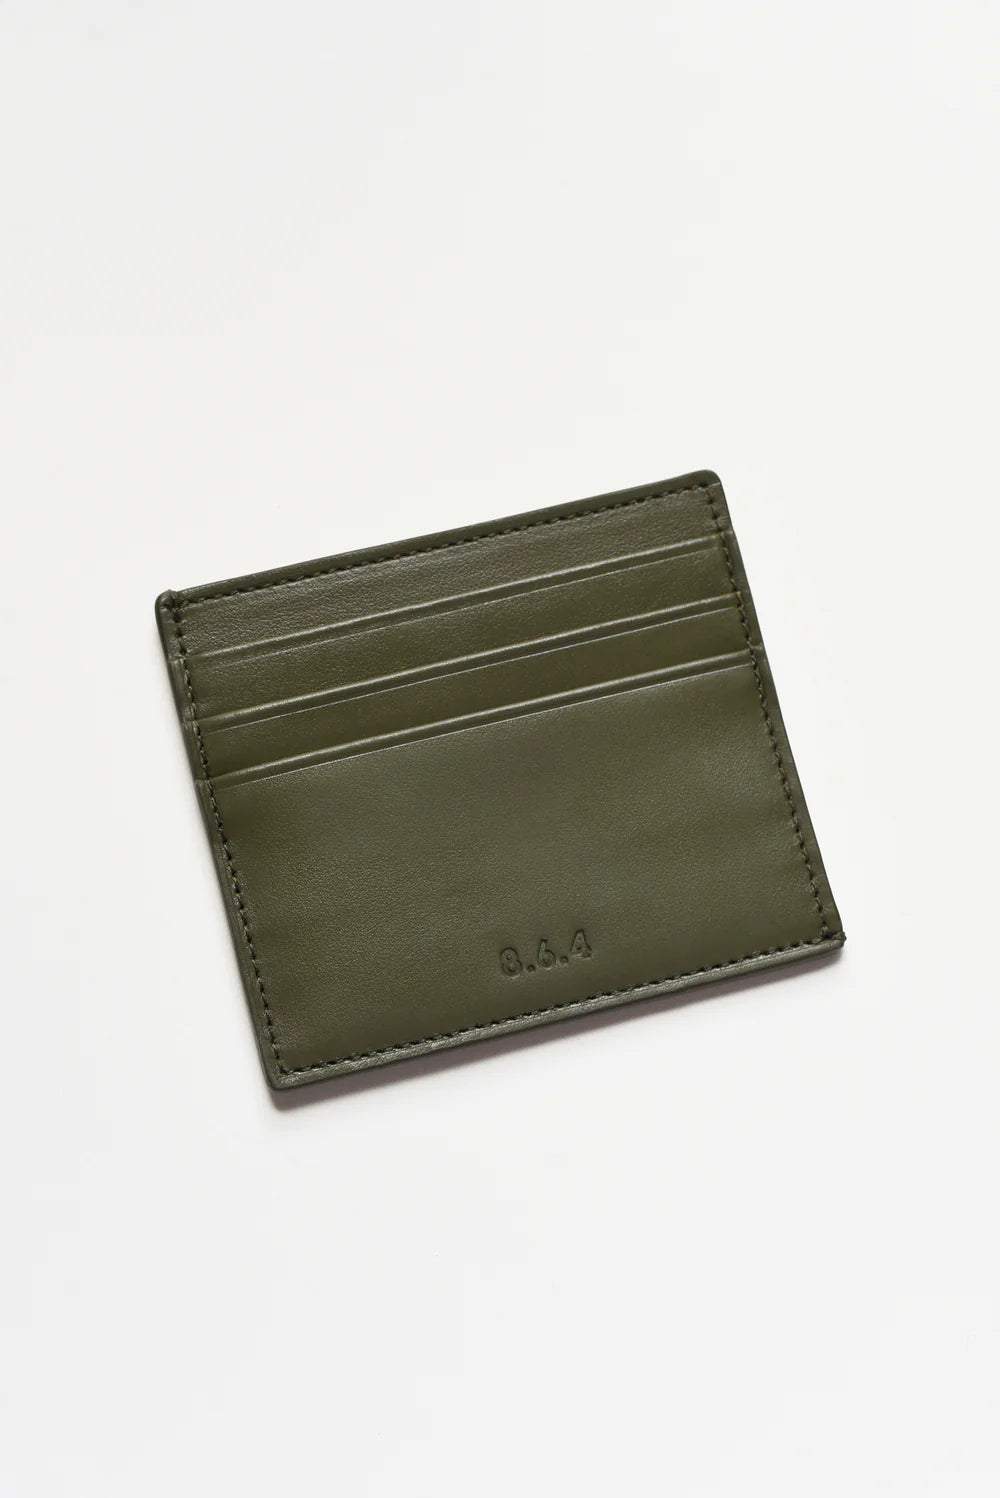 8.6.4 :: Card Case/Wallet